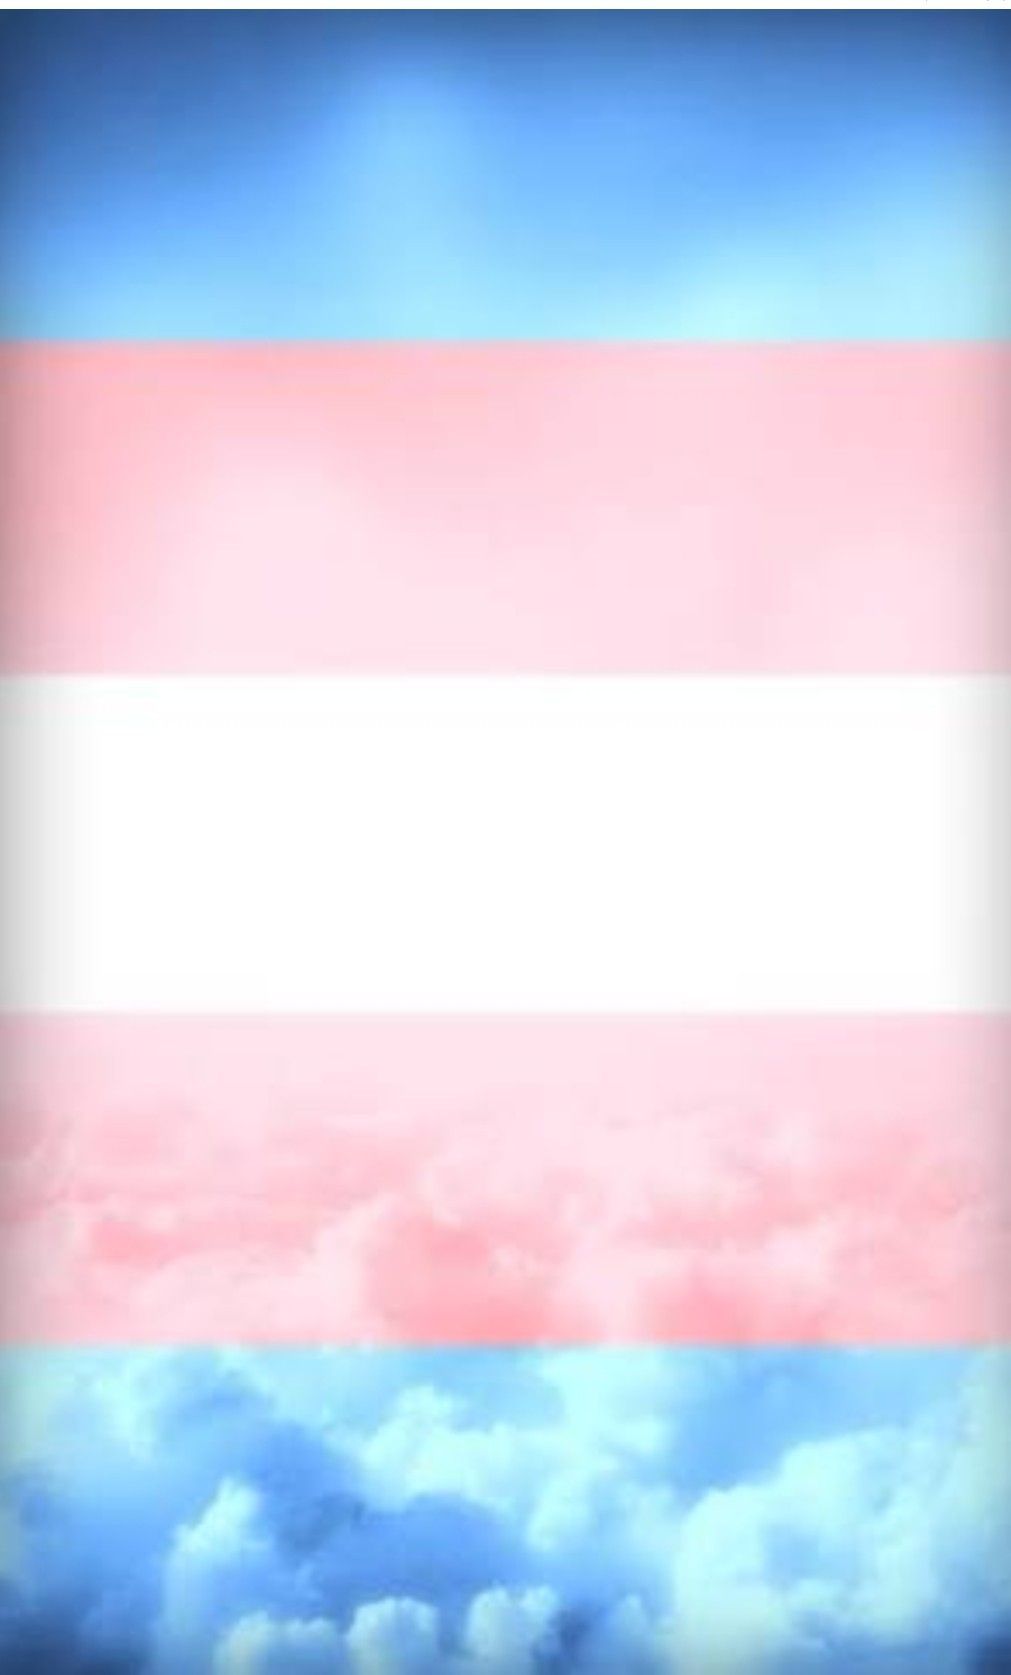 Trans Flag art. Trans flag, Trans pride flag, Rainbow wallpaper